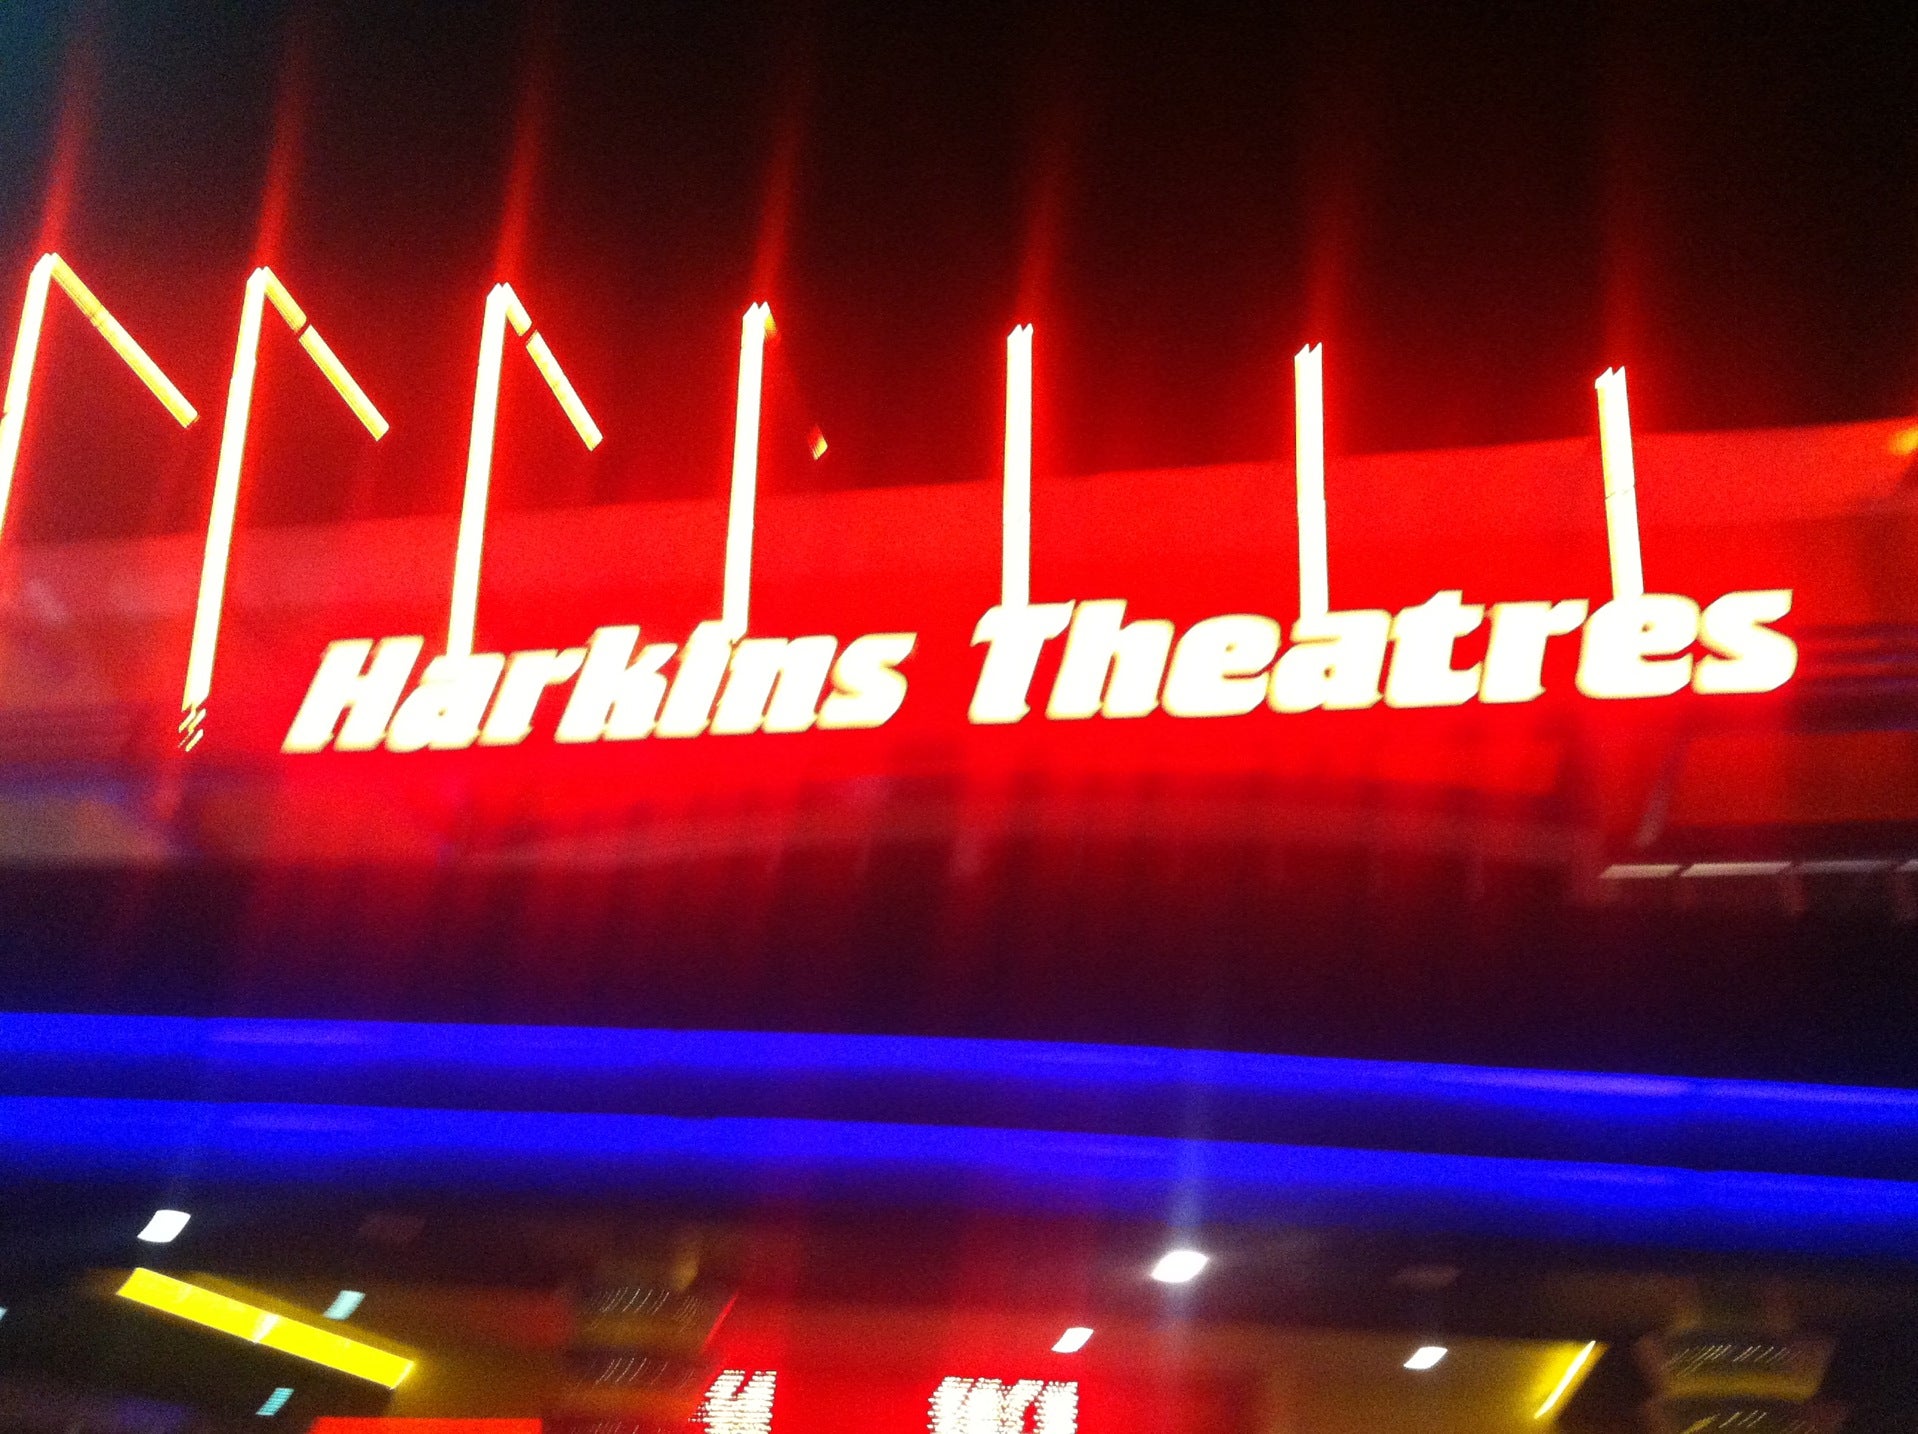 Harkins Theatres Gateway Pavilions 18, 10250 W McDowell Rd, Avondale